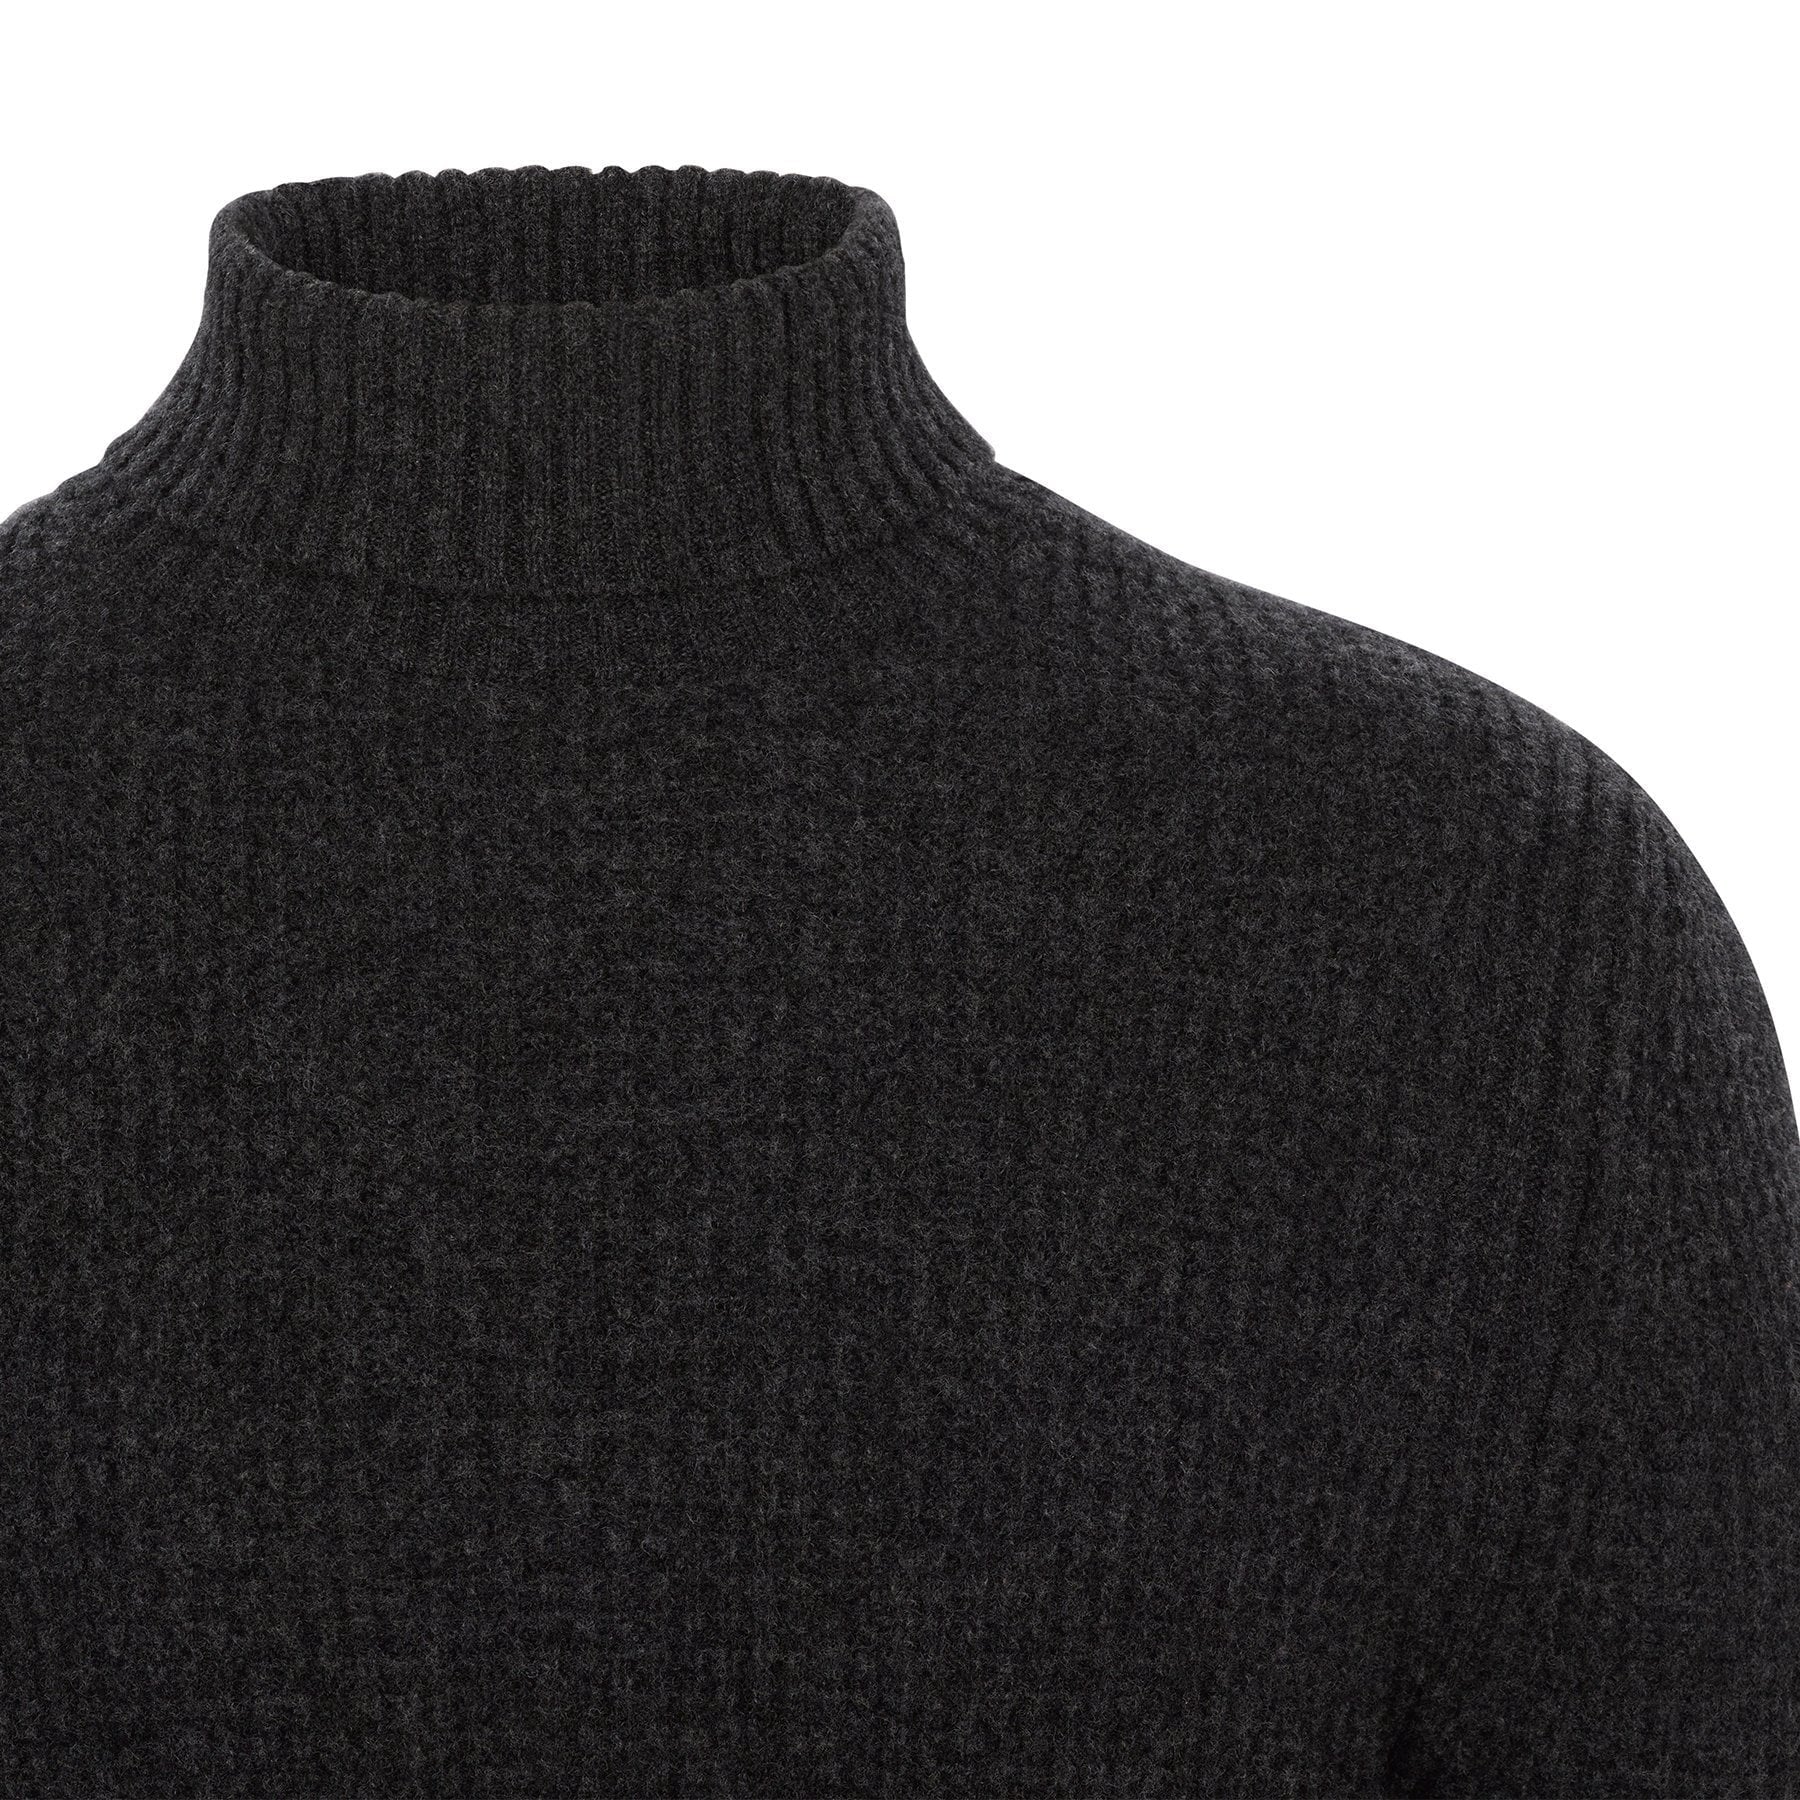 West Chalet Master Men's Fashion Slim Half Turtleneck Sweater